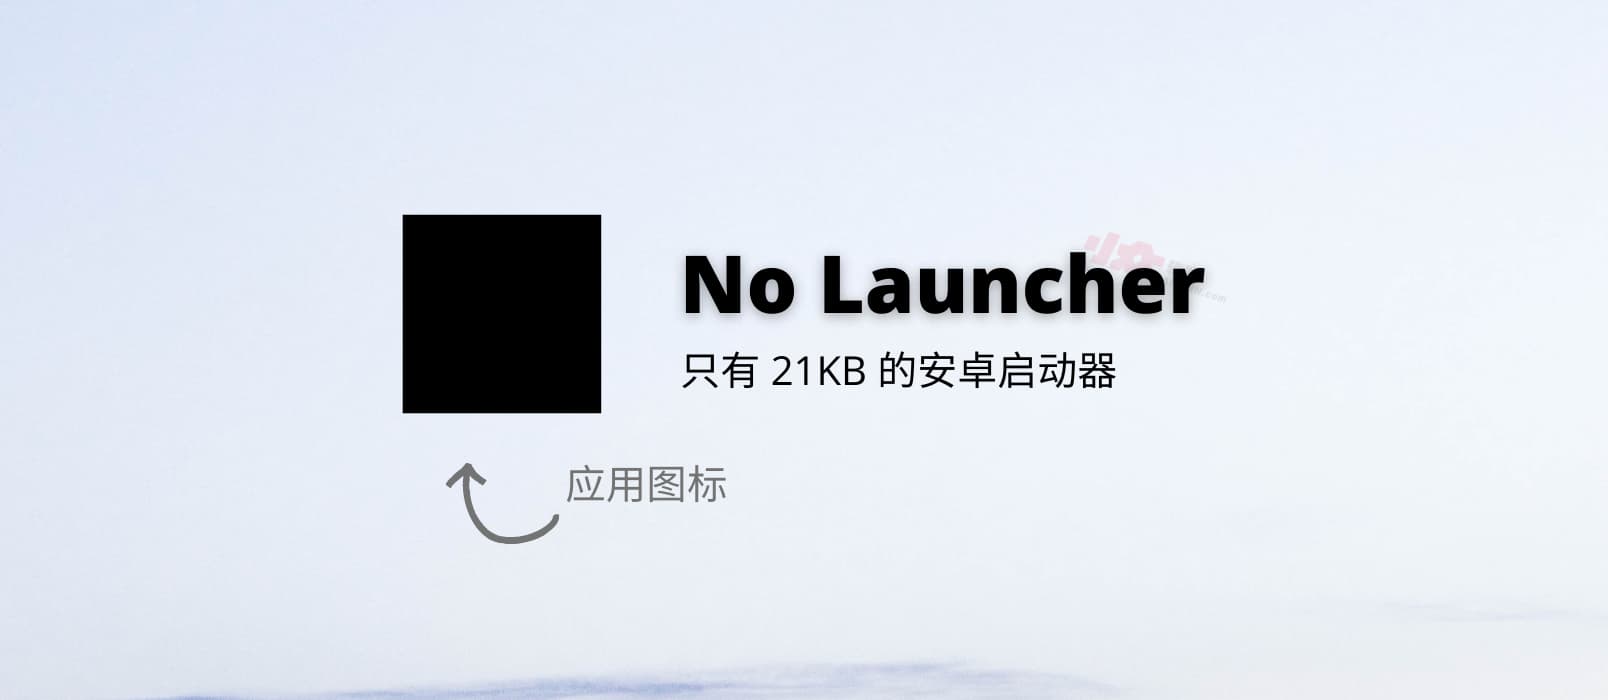 No Launcher - 只有 21KB 的安卓启动器